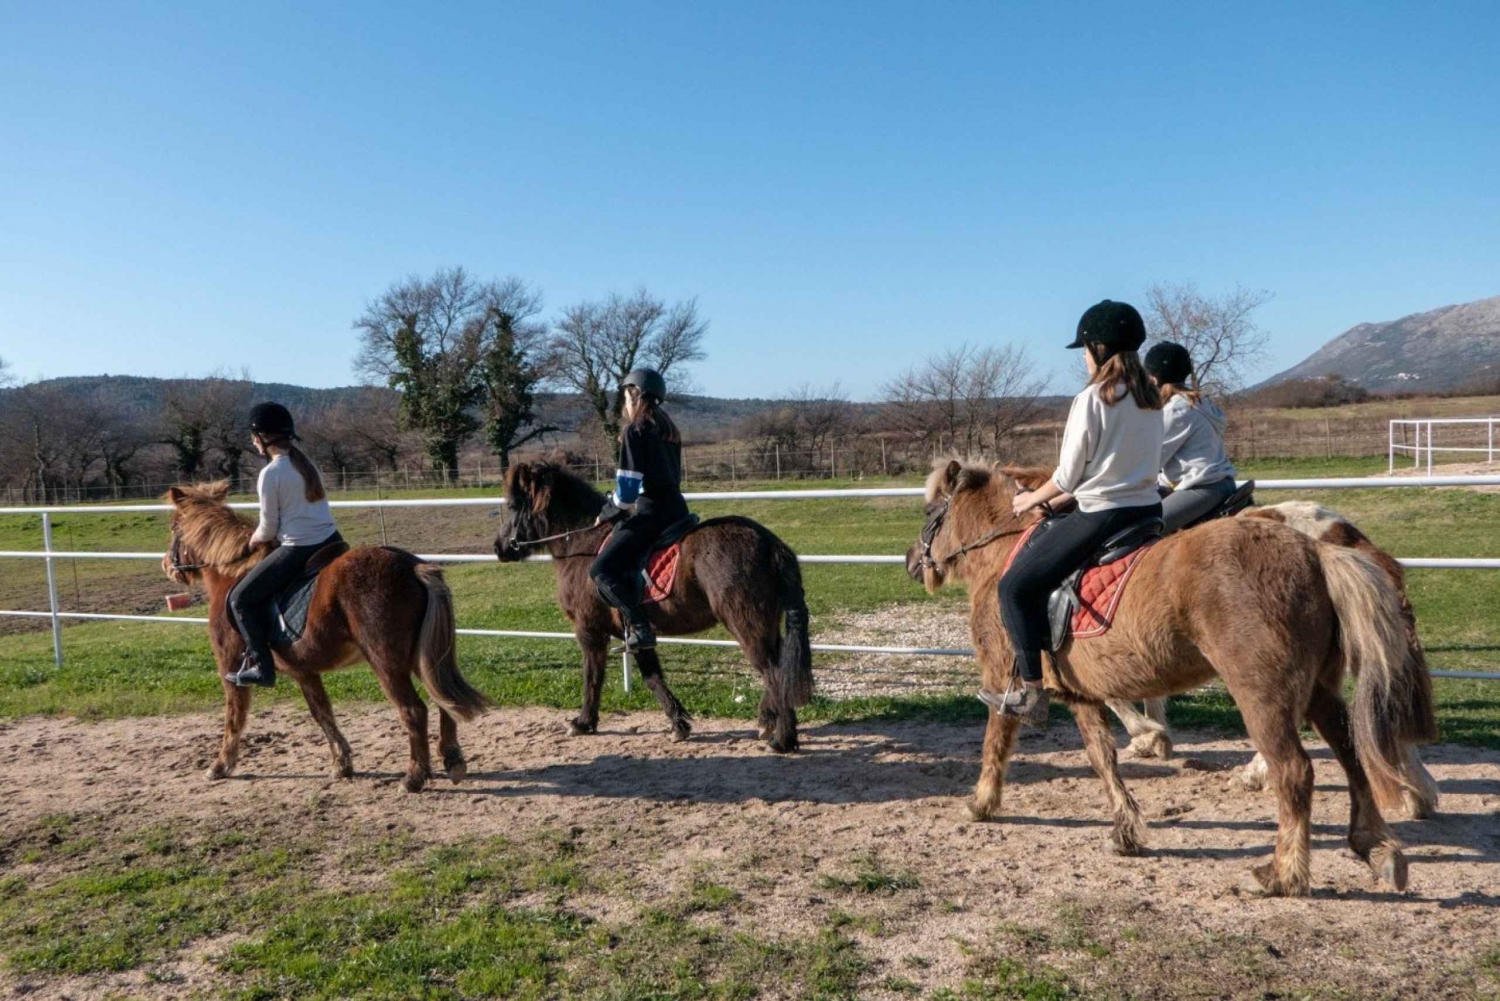 From Dubrovnik: Horseback Riding Day Tour in Konavle Valley